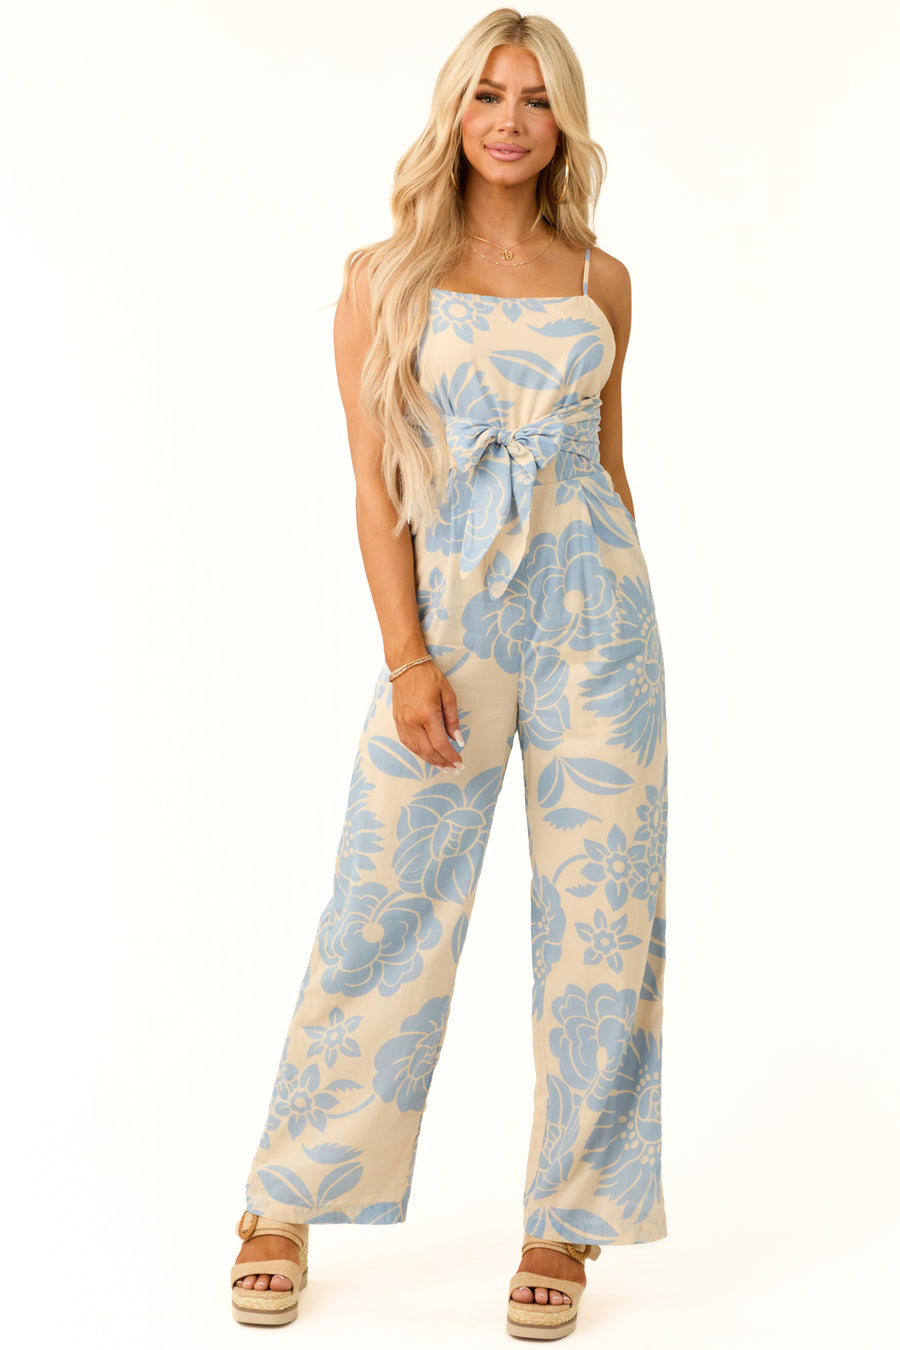 Beige and Powder Blue Floral Print Jumpsuit